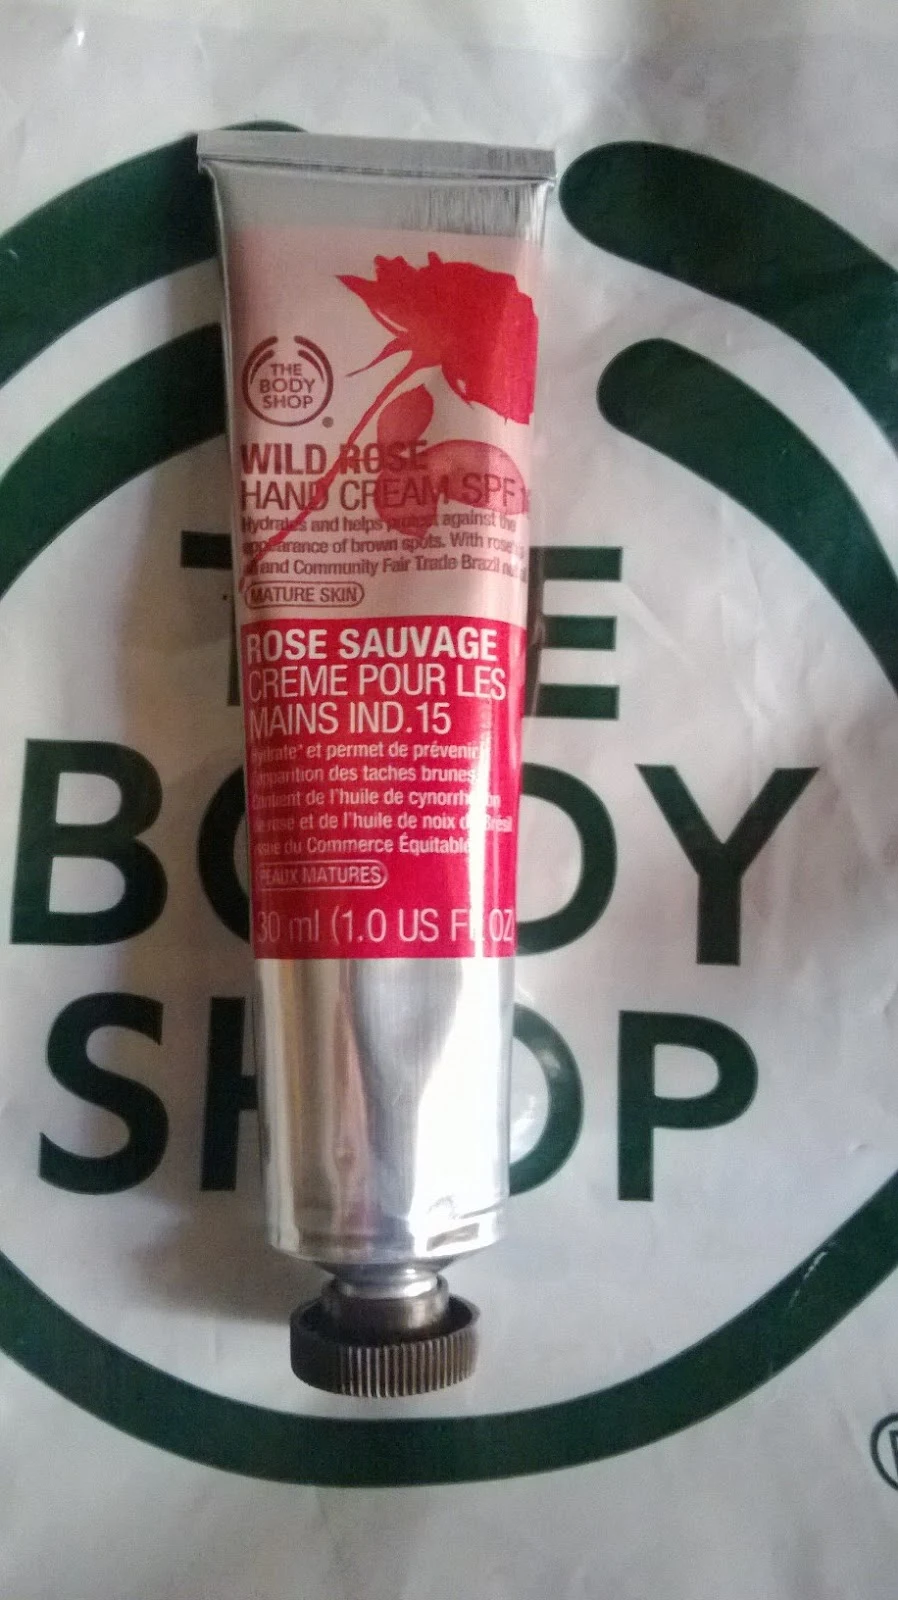 The Body Shop Wild Rose Hand Cream SPF 15 Review